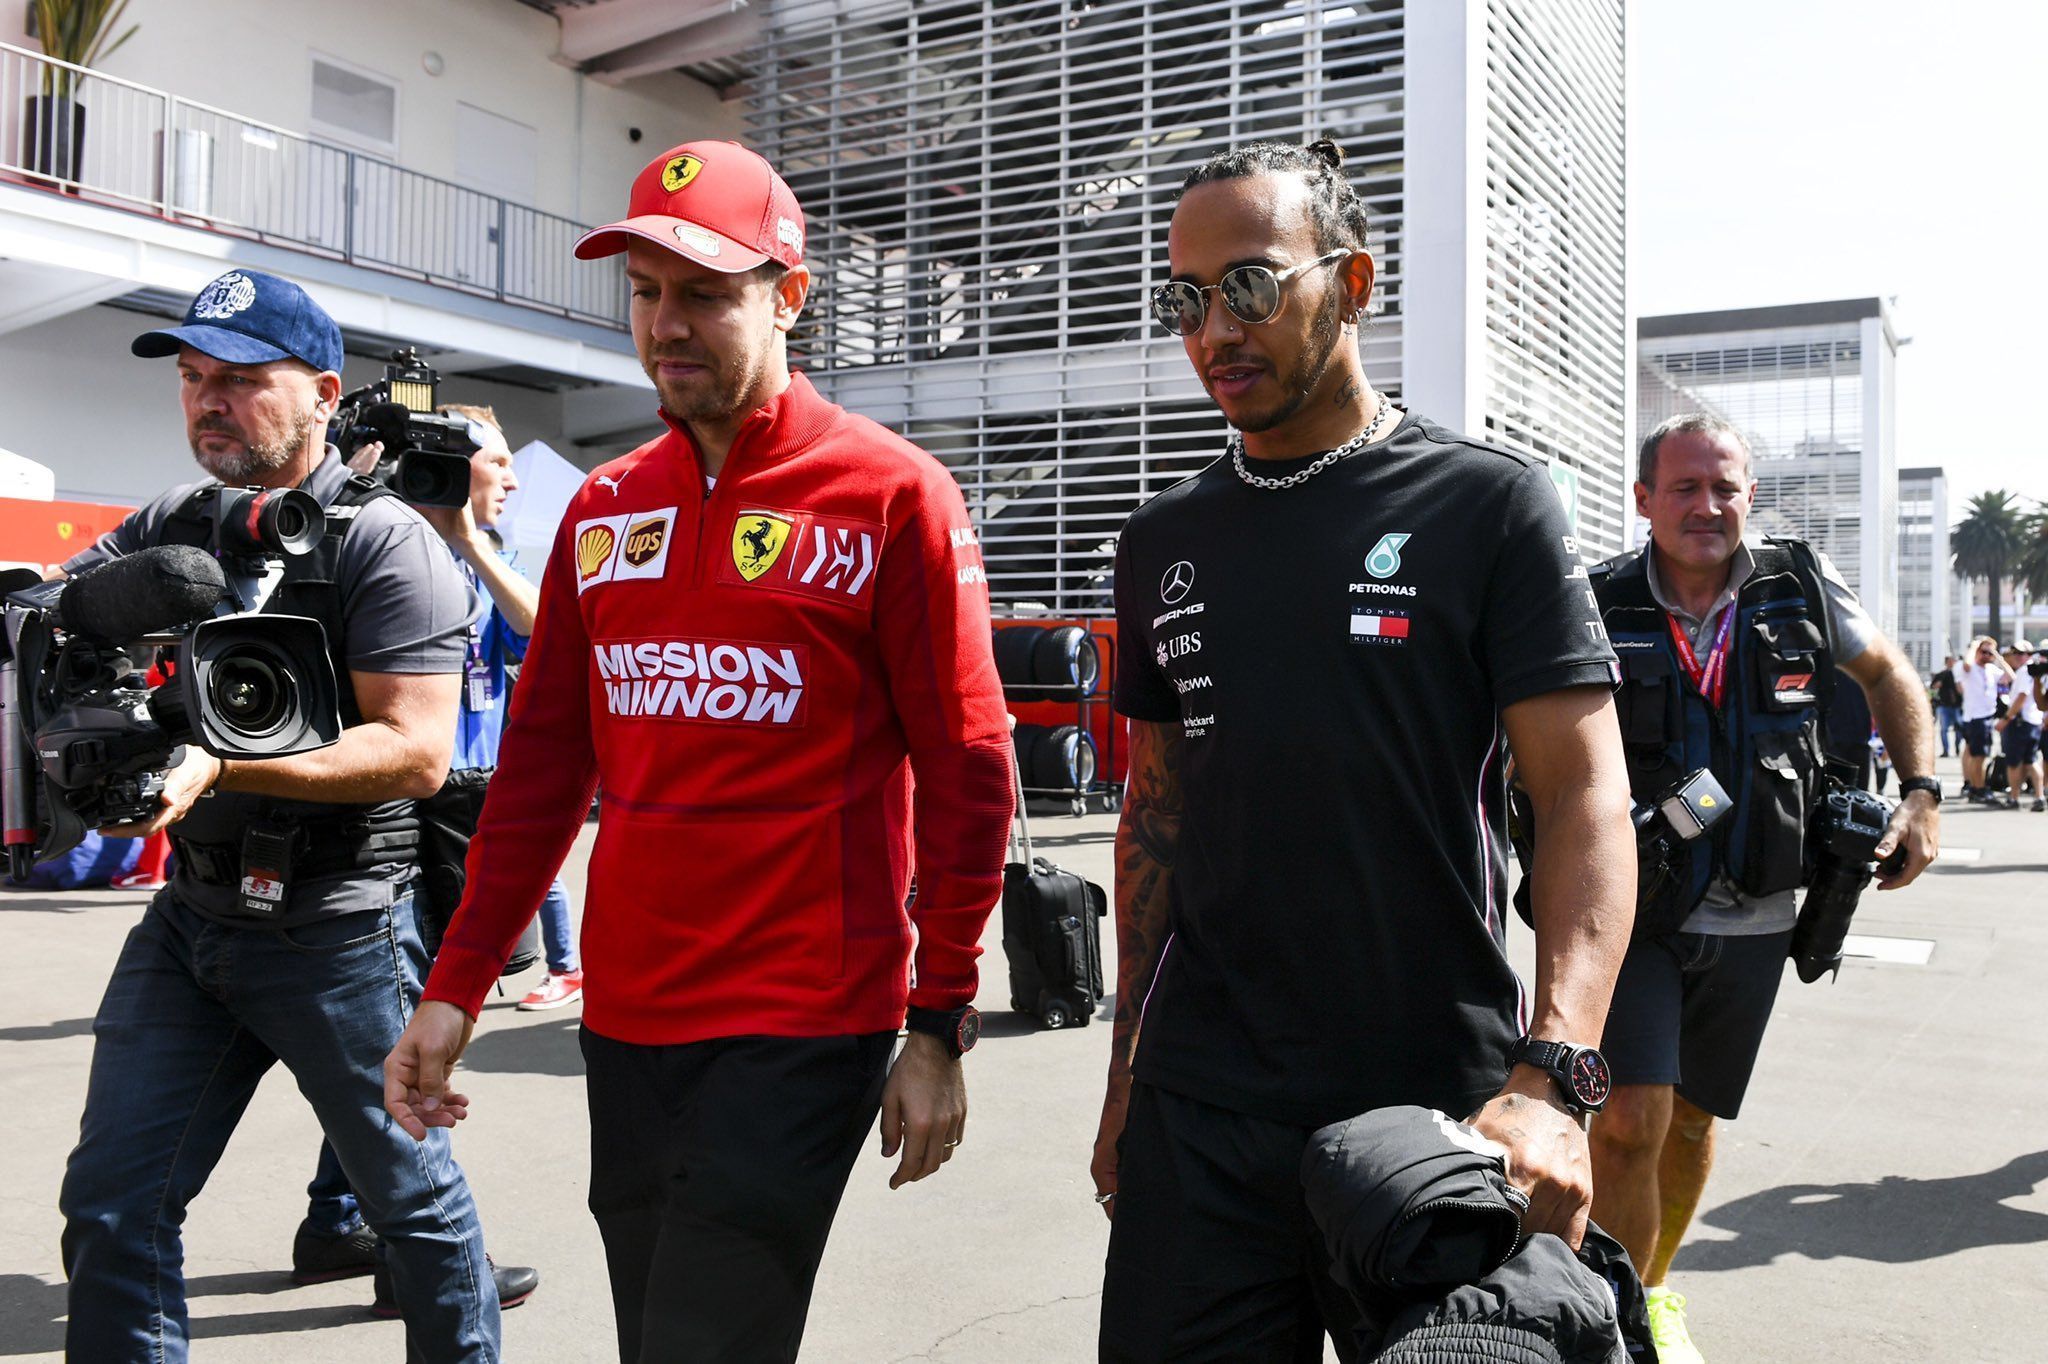 Lewis Hamilton, Ferrari